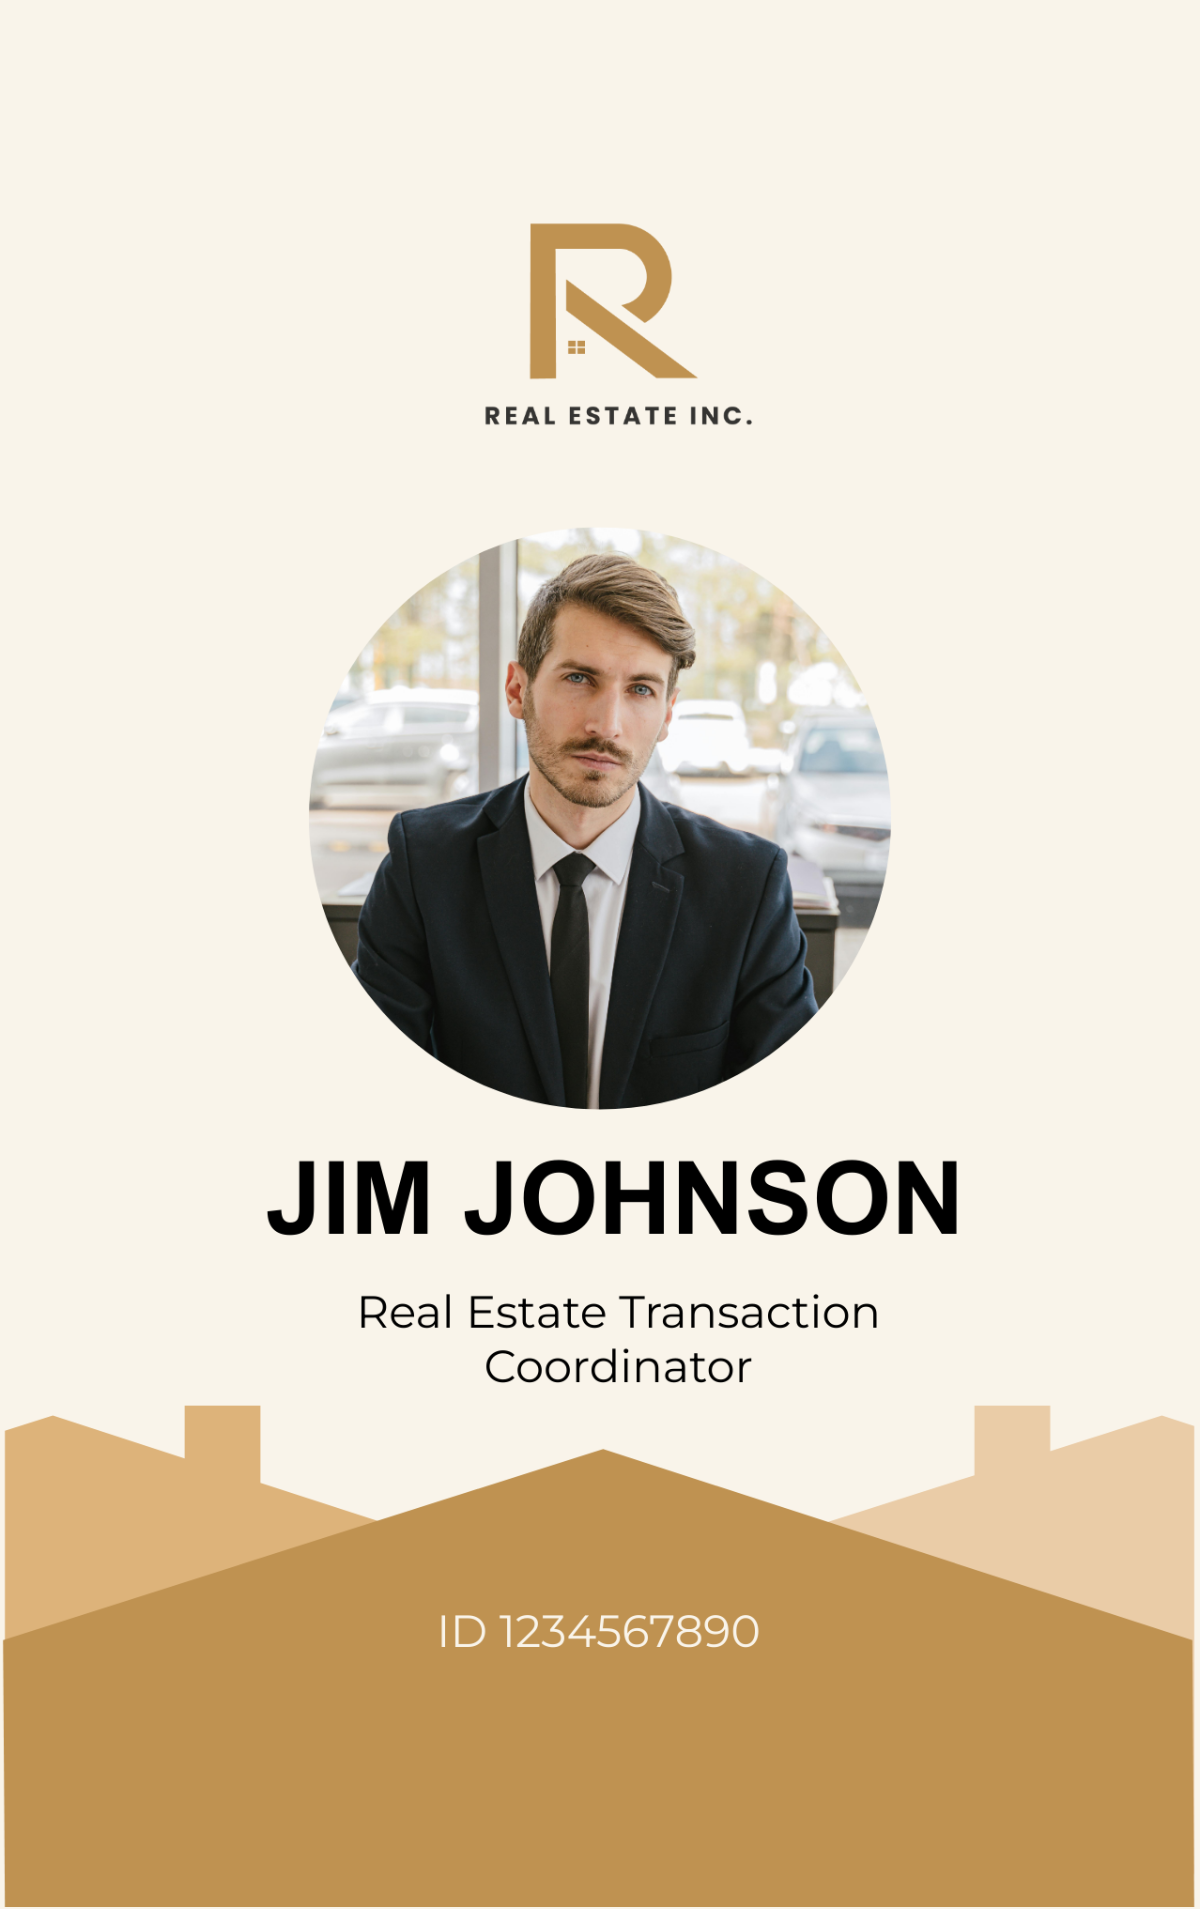 Real Estate Transaction Coordinator ID Card Template